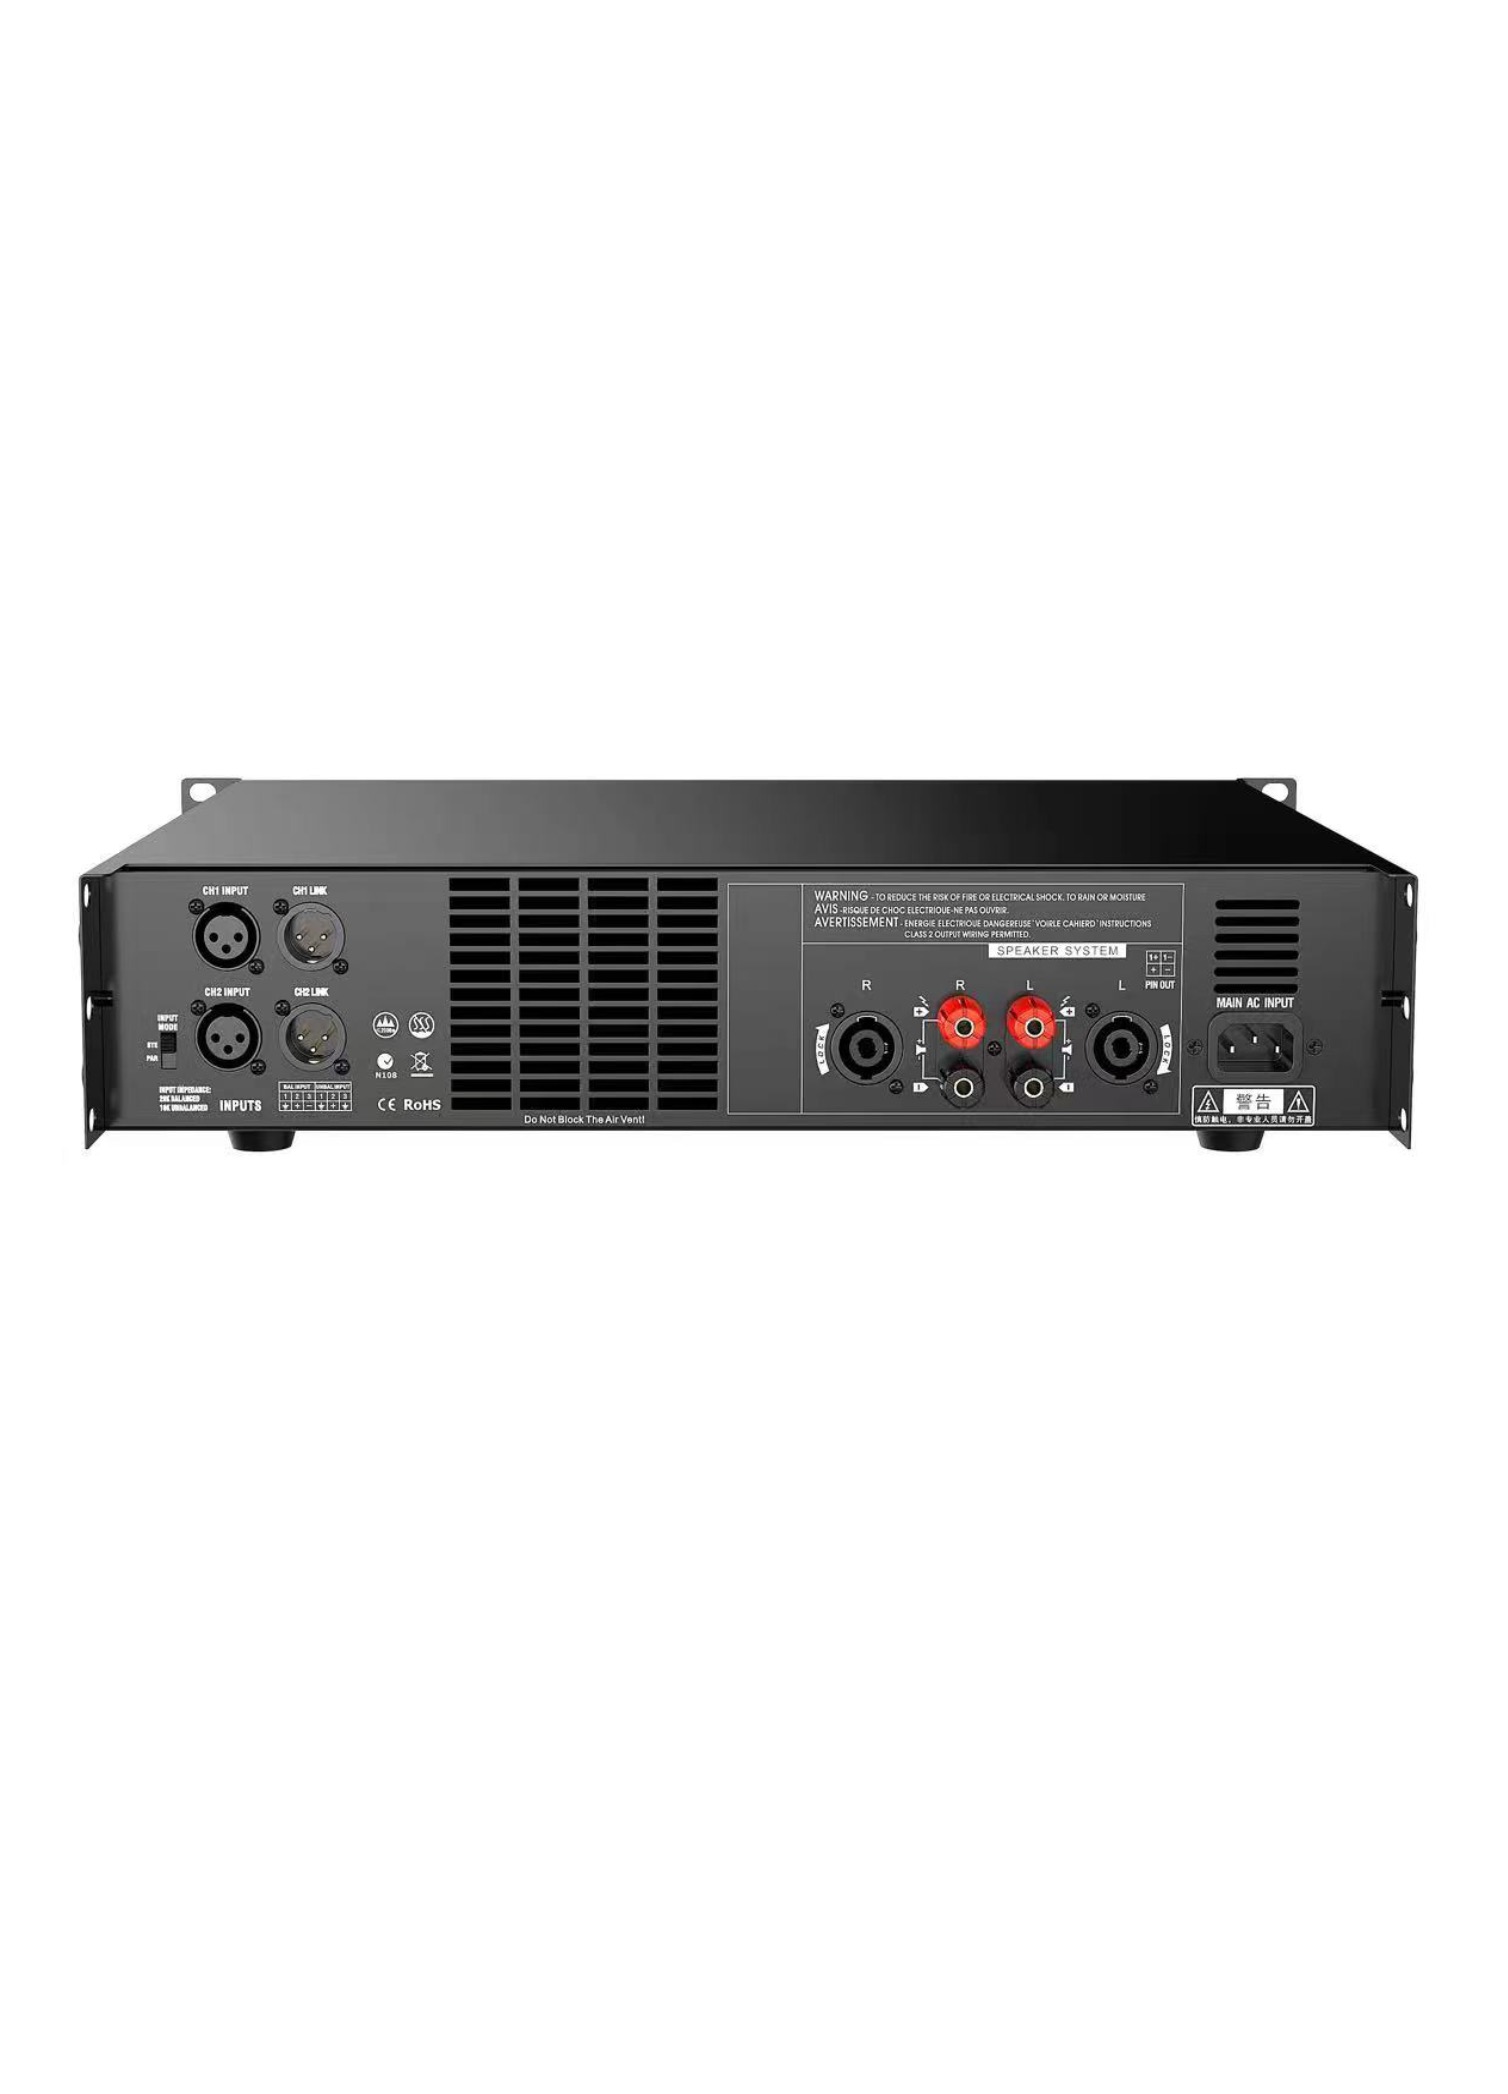 CS series power amplifiers